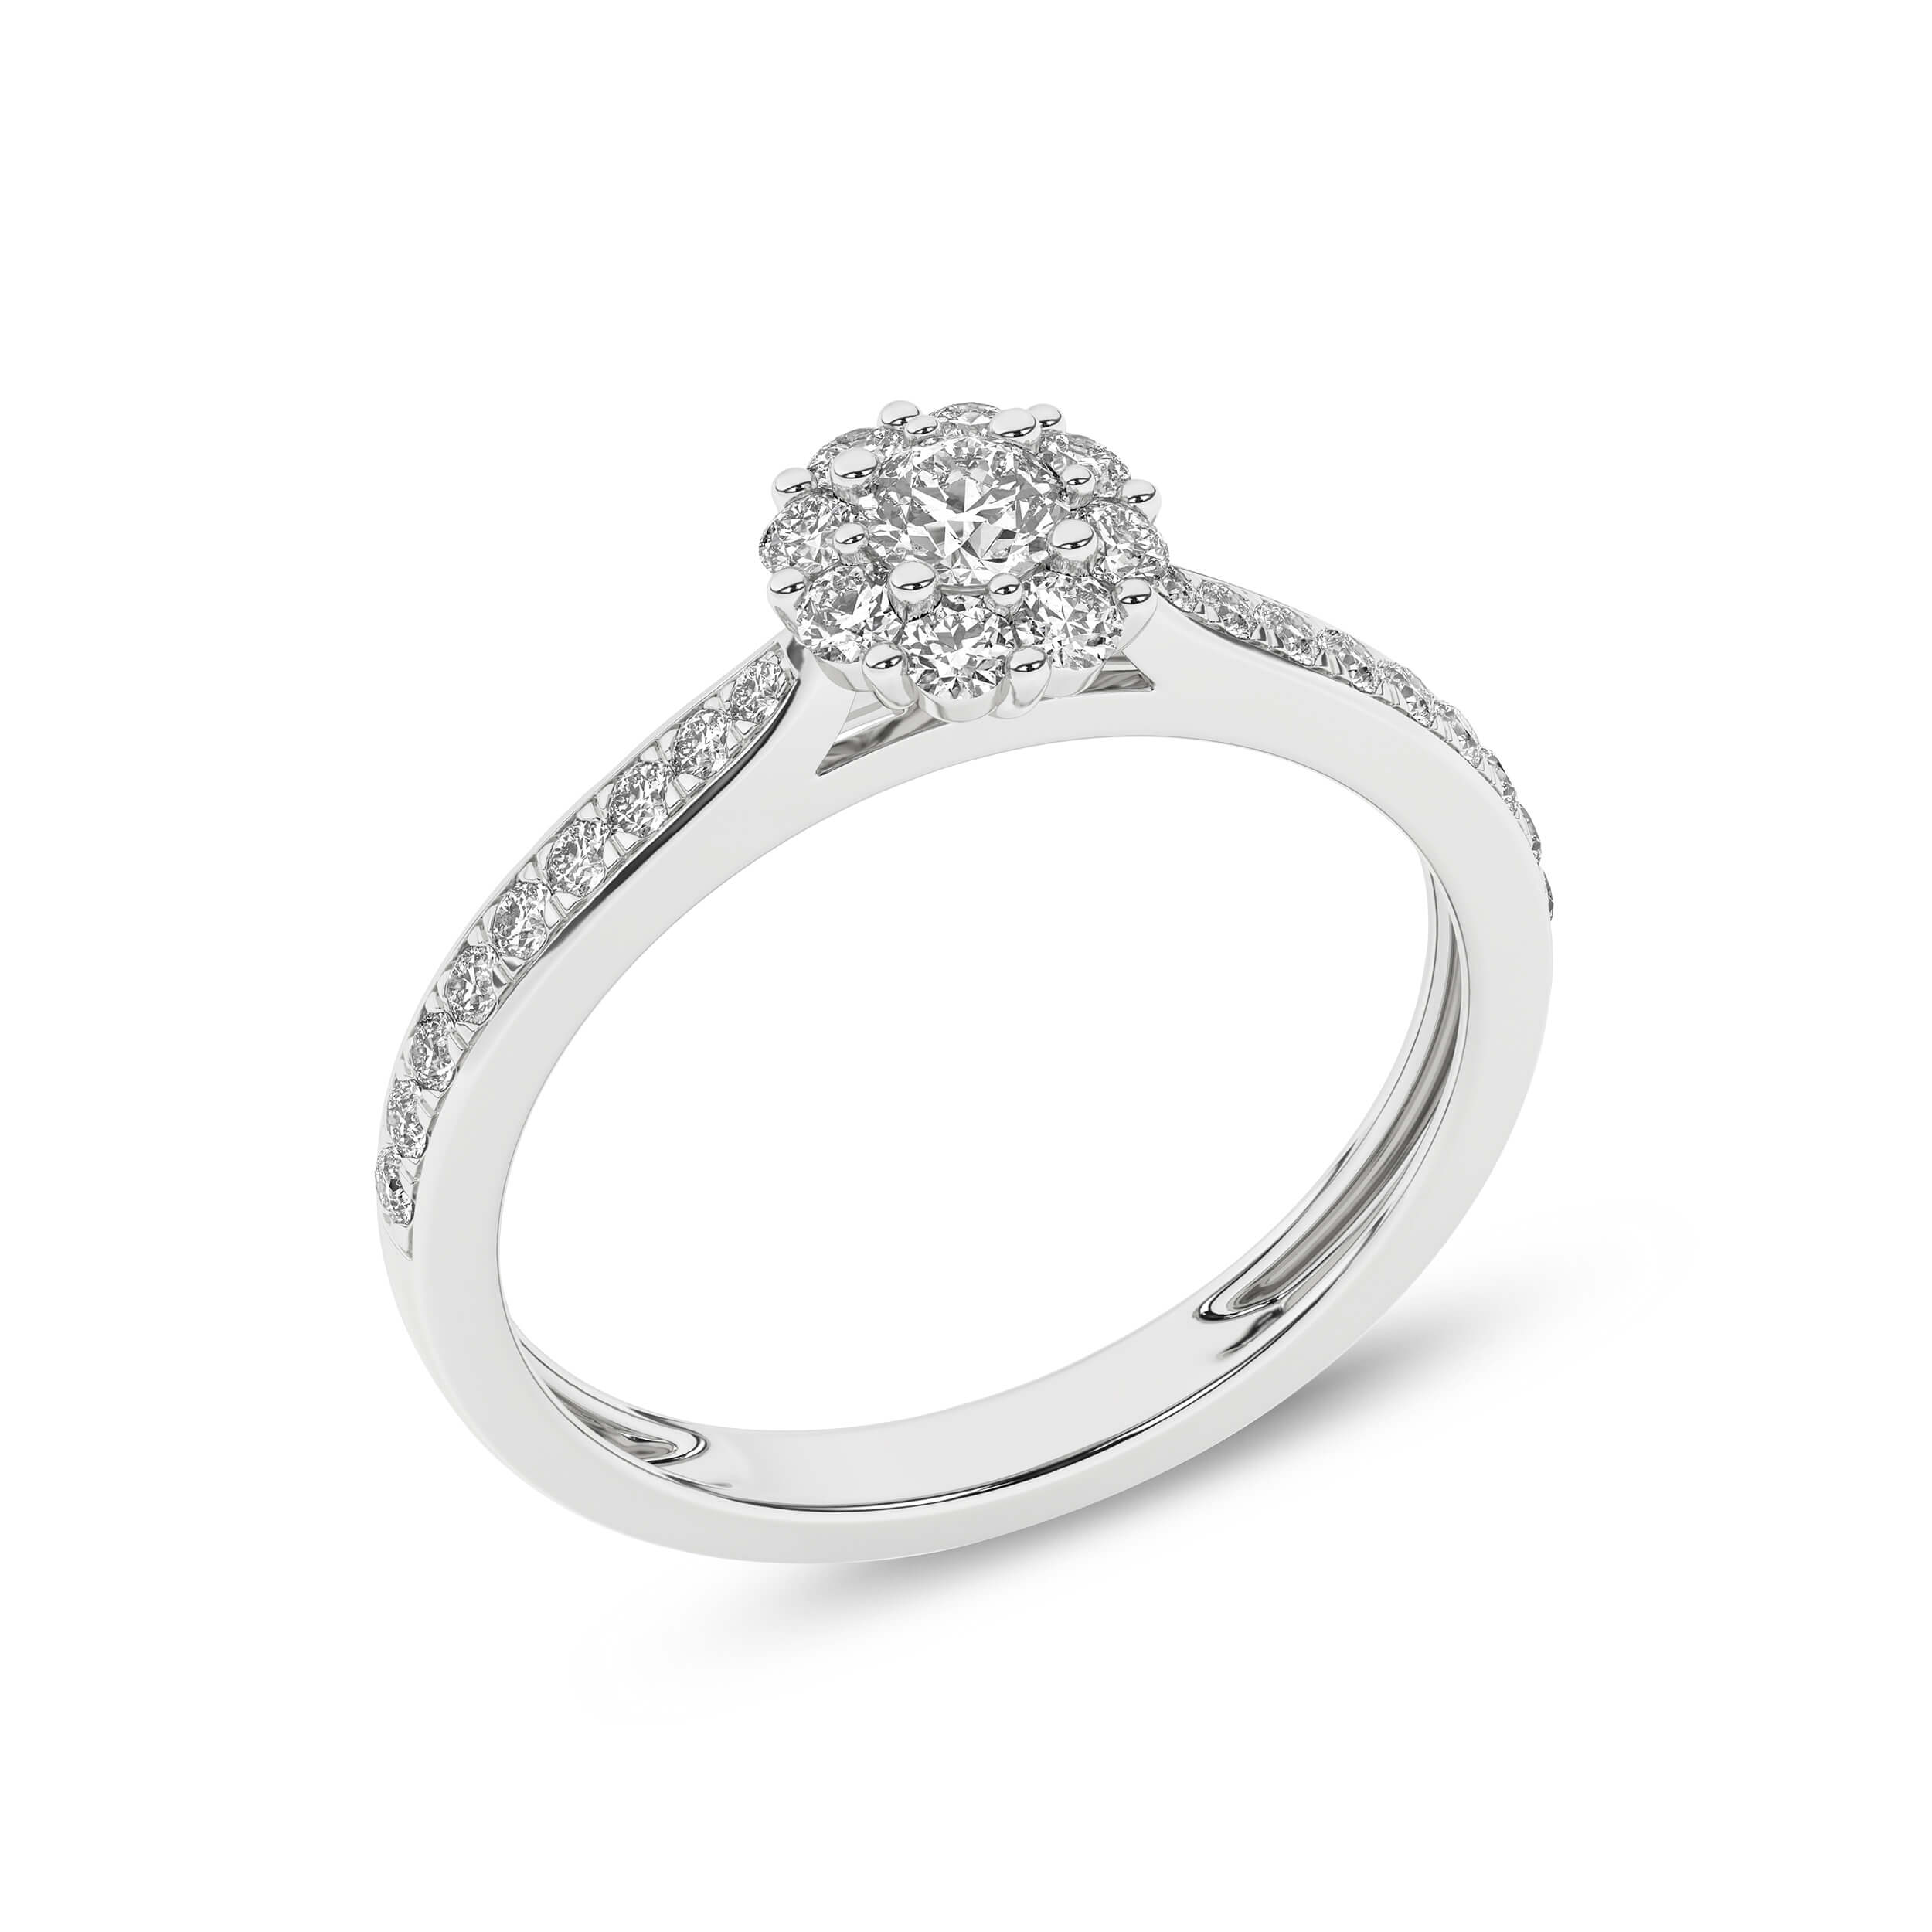 Inel de logodna din Aur Alb 18K cu Diamante 0.50Ct, articol RB9688EG, previzualizare foto 4